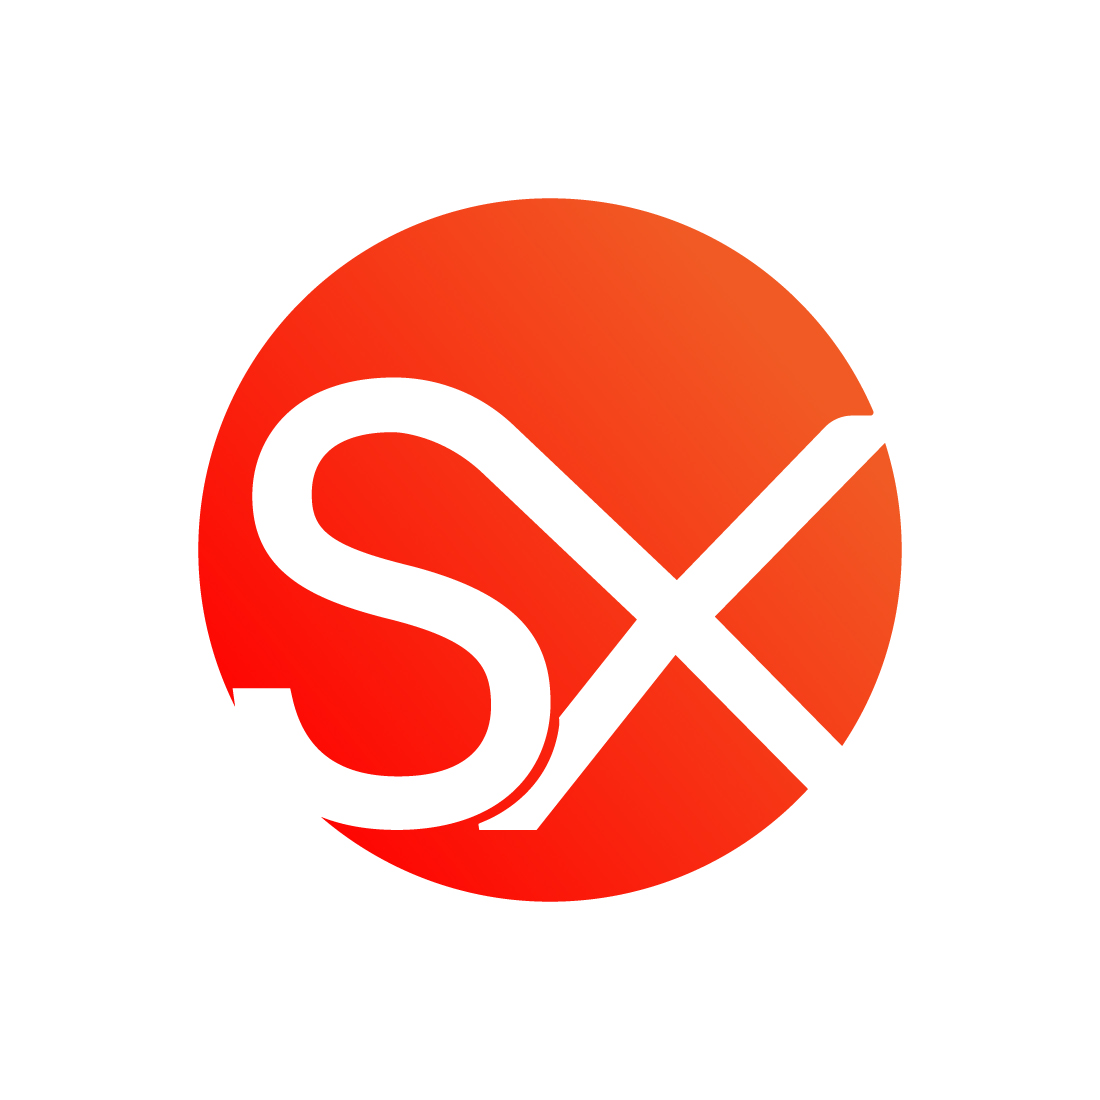 Initials SX letters logo design vector template images SX logo orange color logo design XS logo monogram design preview image.